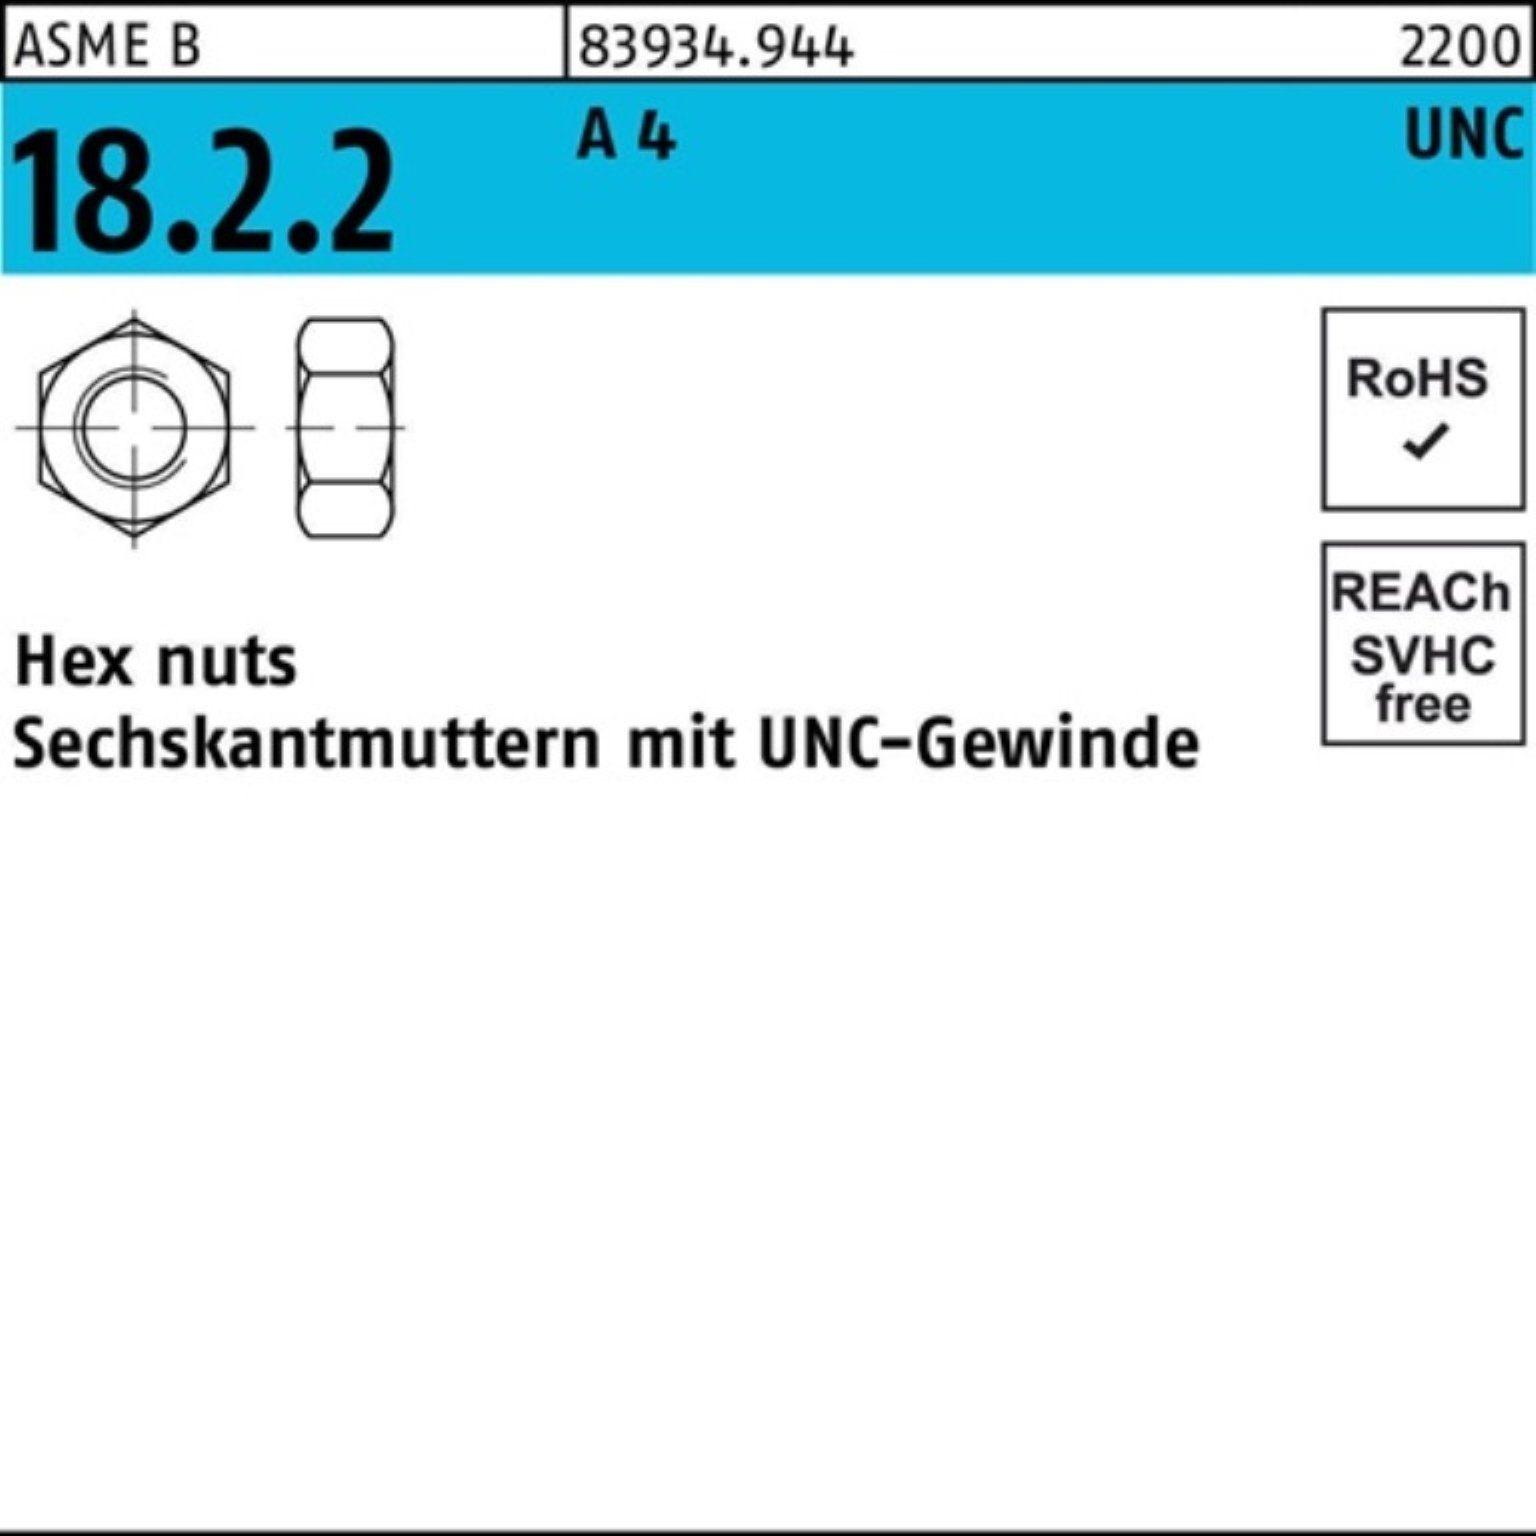 Reyher Muttern 100er Pack Sechskantmutter R 83934 UNC-Gewinde 1/4 A 4 100 Stück ASME